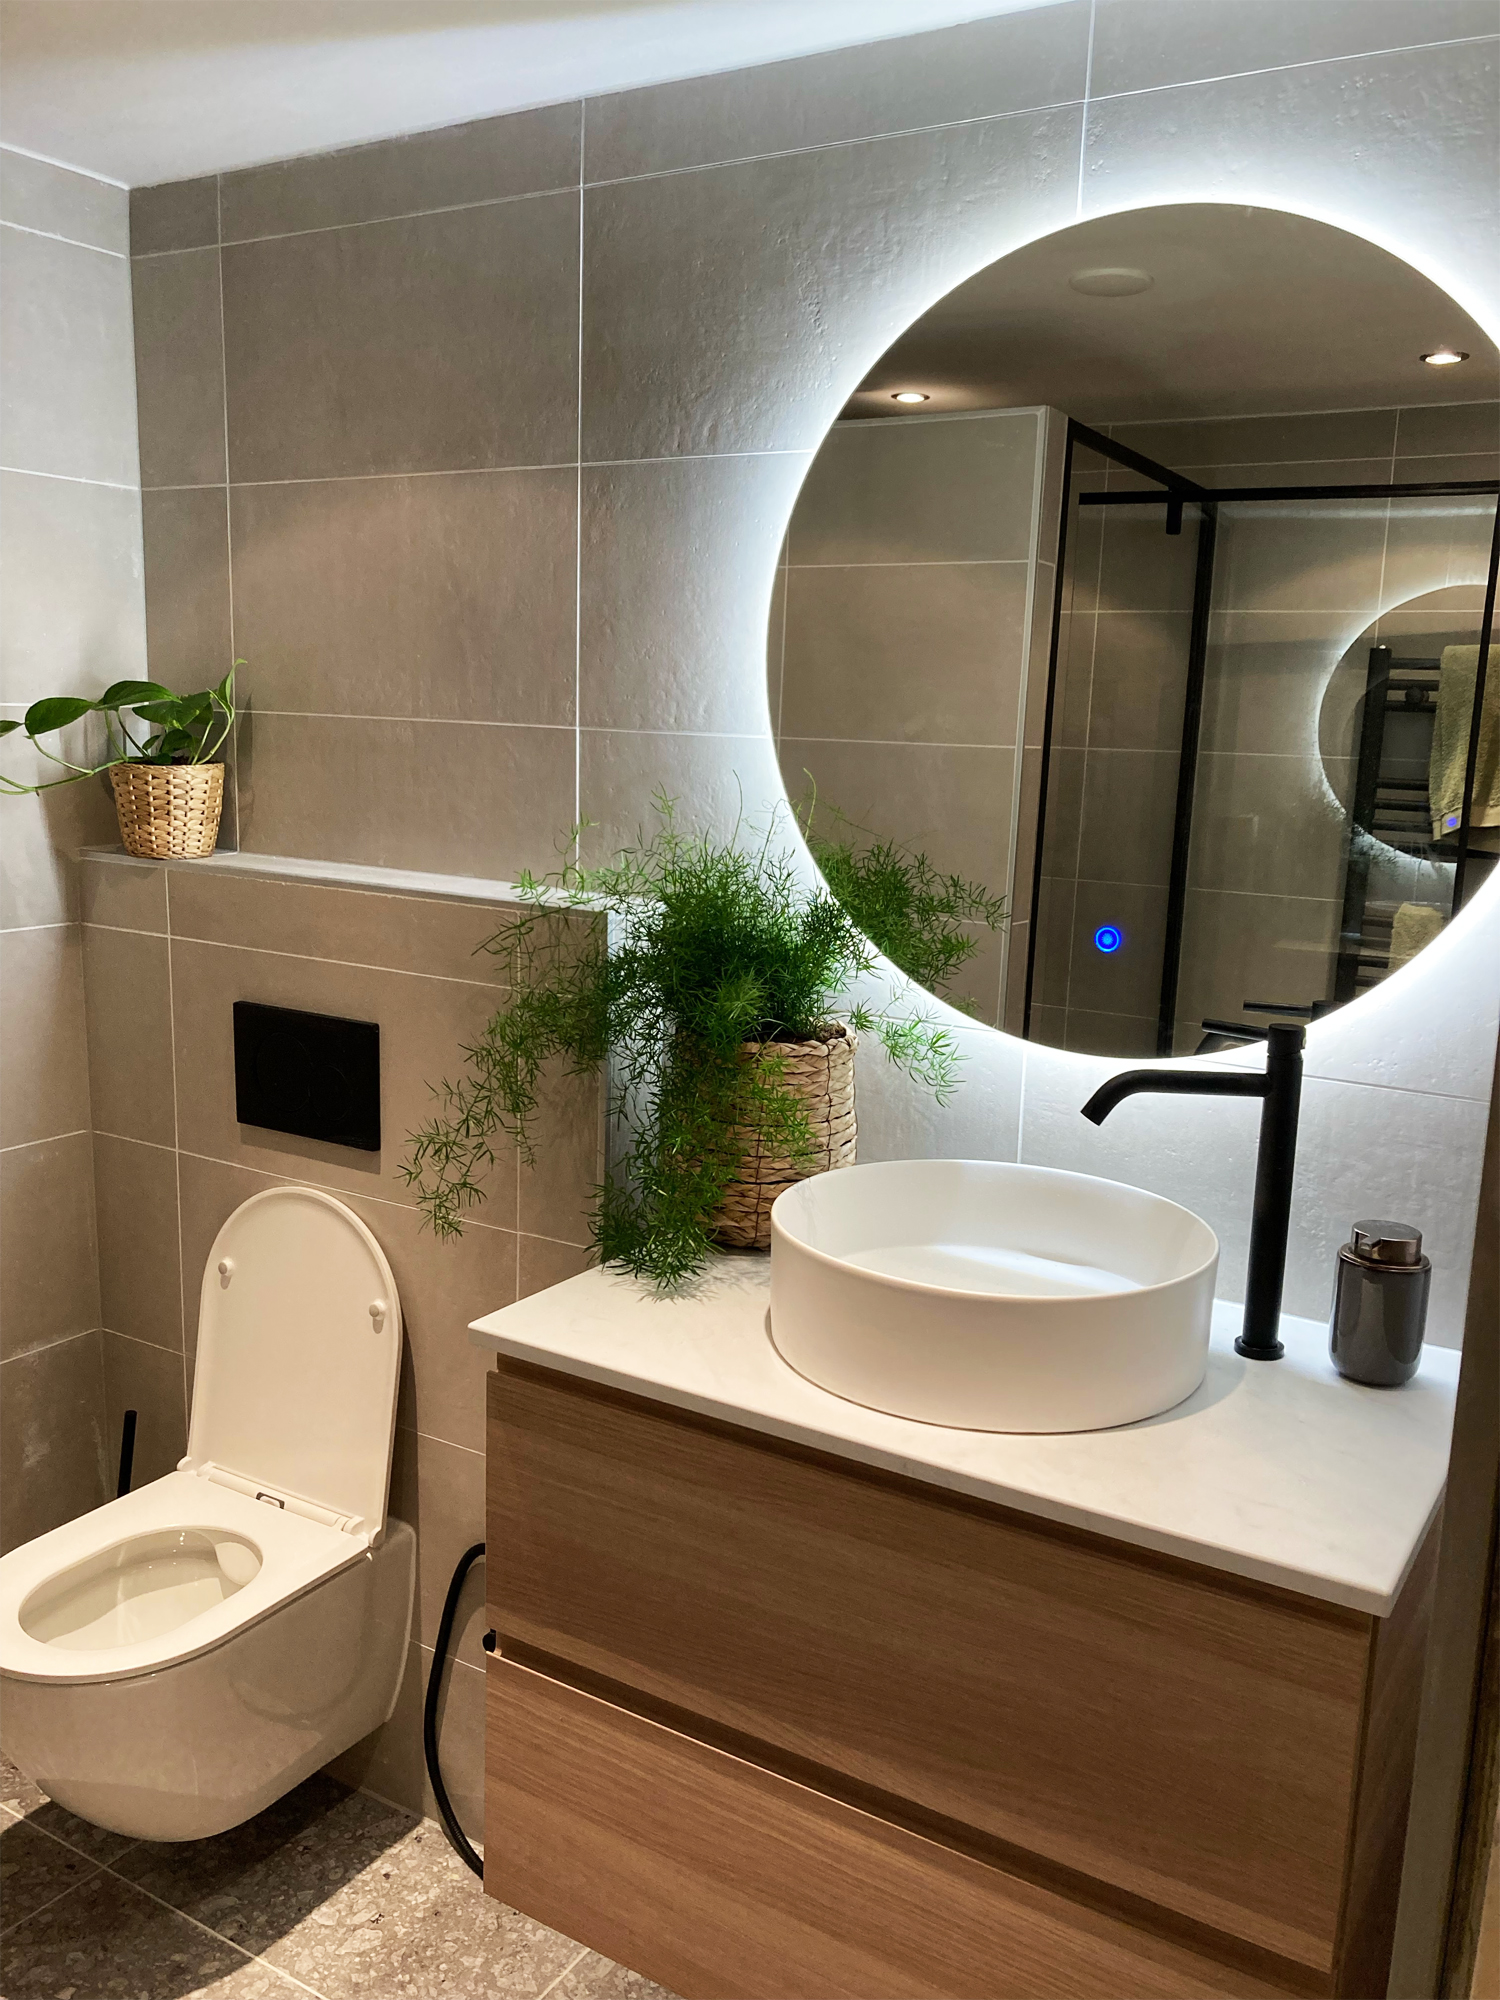 Moderne badkamer inspiratie - RB Sanitair in Tiel - Blog